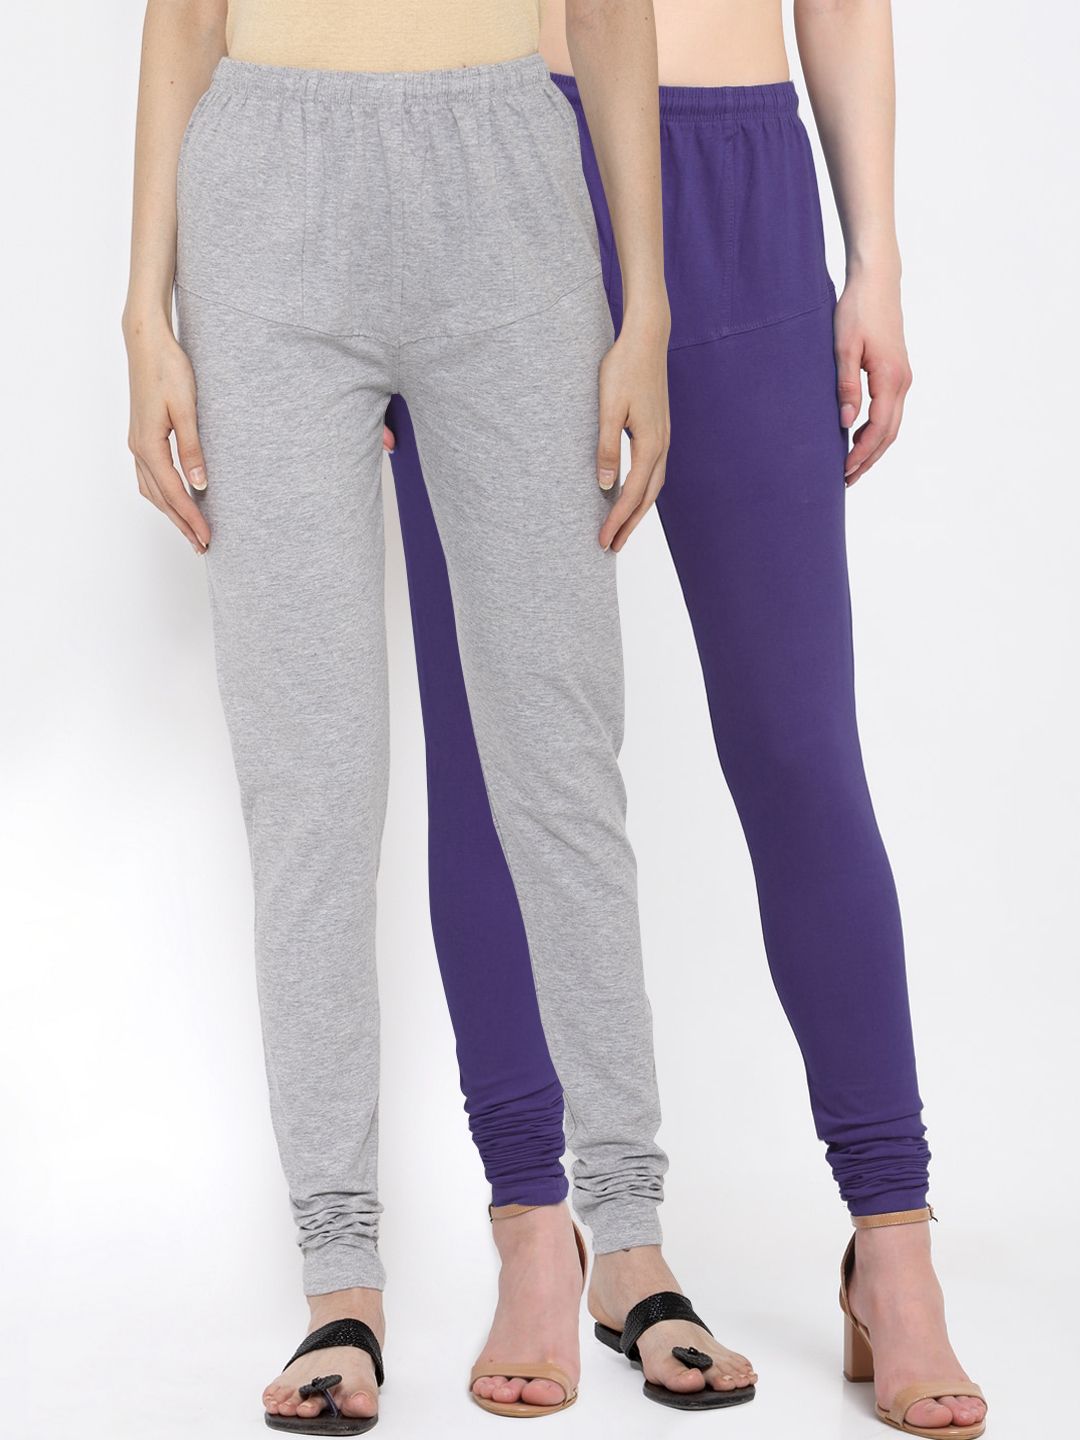 KLOTTHE Women Pack Of 2 Purple & Grey Solid Cotton Churidar-Length Leggings Price in India